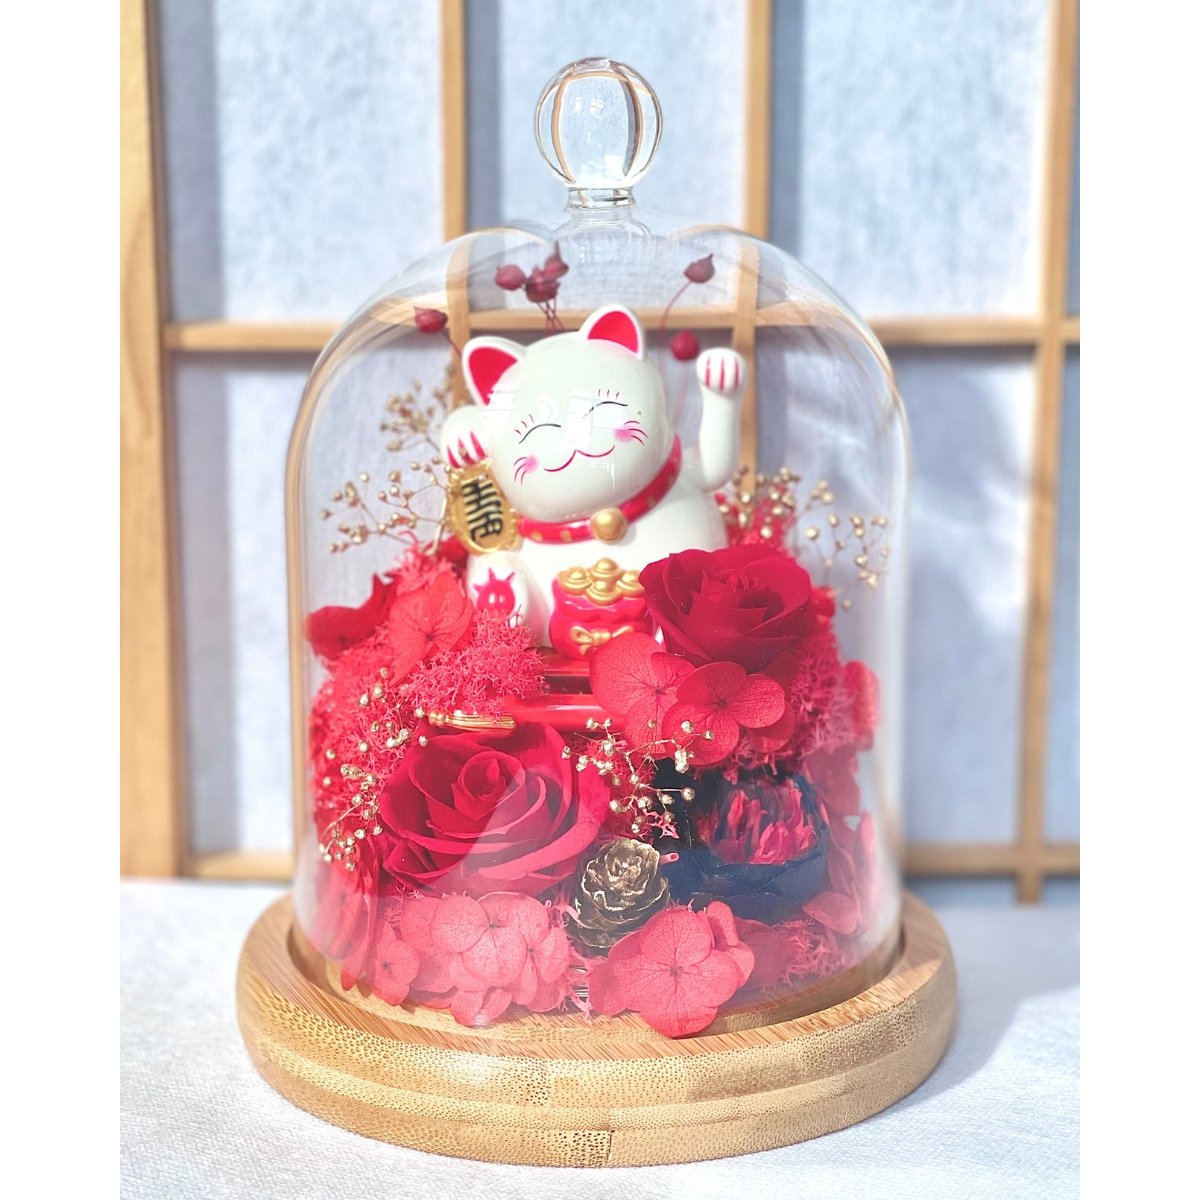 Maneki-Neko 招き猫 Bell Jar, Red (with gift box) - Flower - Preserved Flowers & Fresh Flower Florist Gift Store